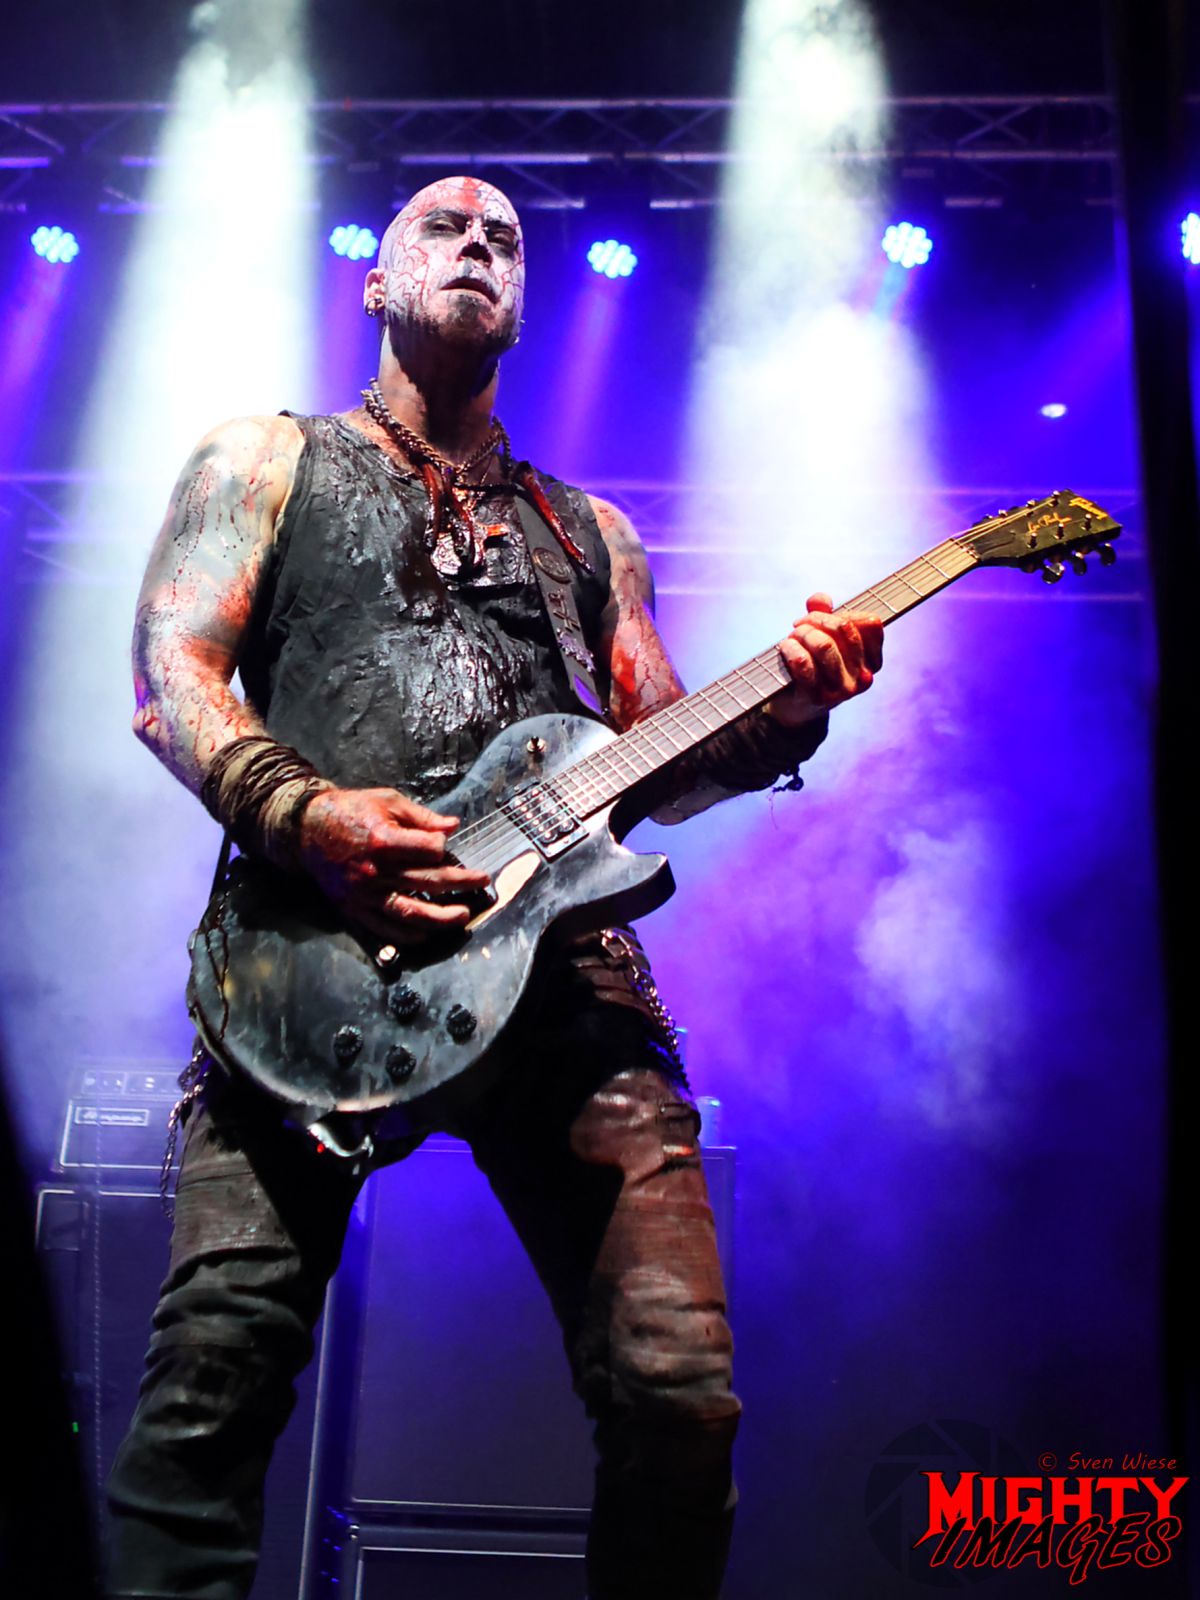 (FOTO: Mighty Images/Sven Wiese) Überzeugten mit fetzigem Black Metal, die Metalband Chamber of Unlight aus Tampere.